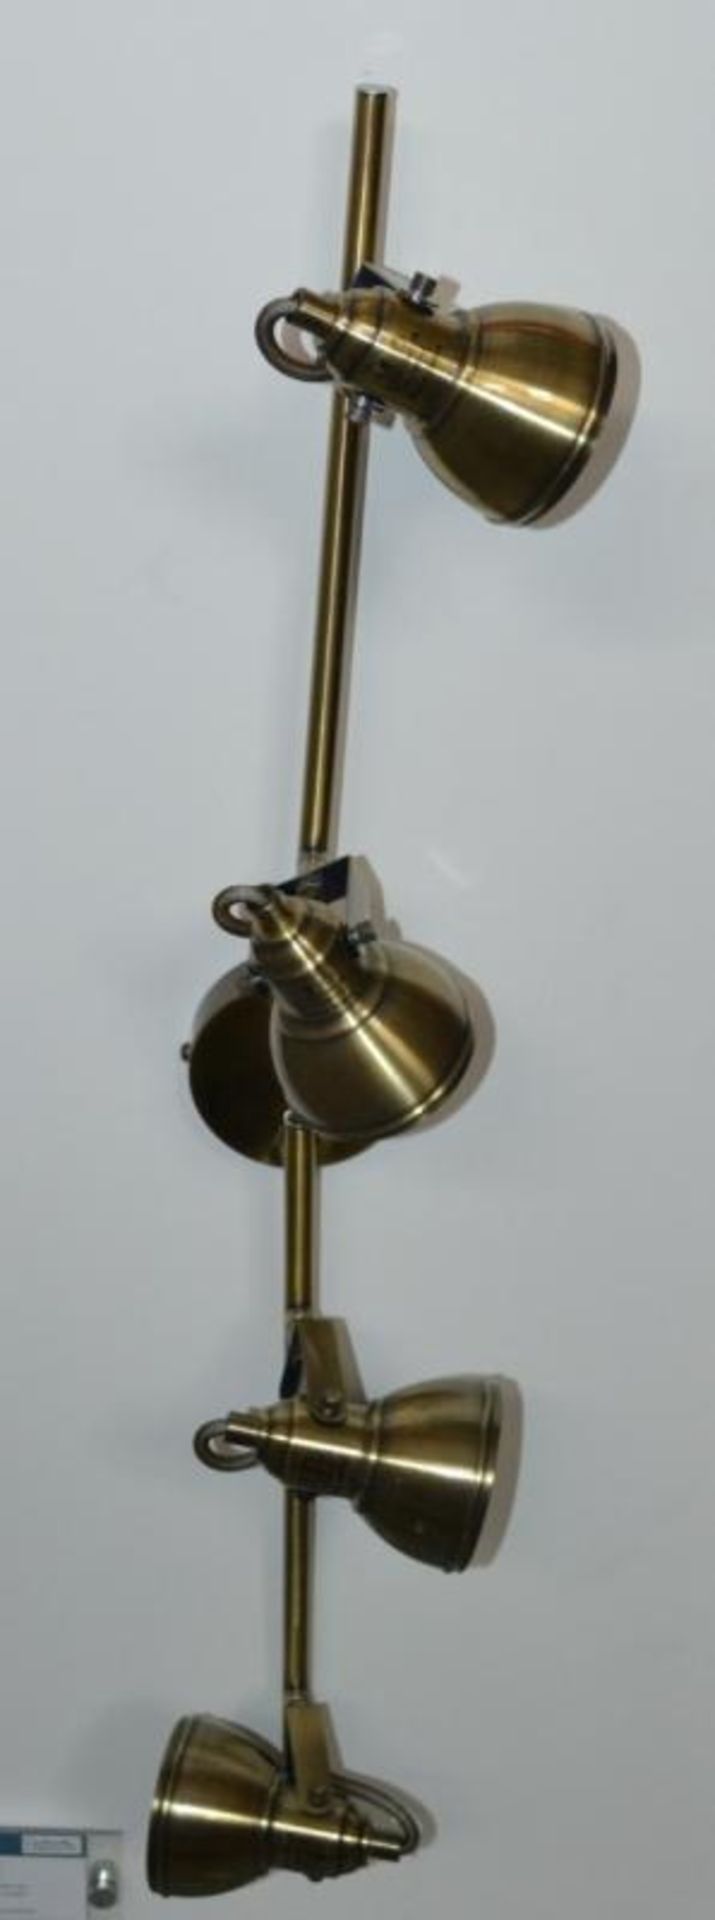 1 x Focus 4 Light Ceiling Spotlight Antique Brass - CL364 - Ref: ERP2- 12685 - Location: